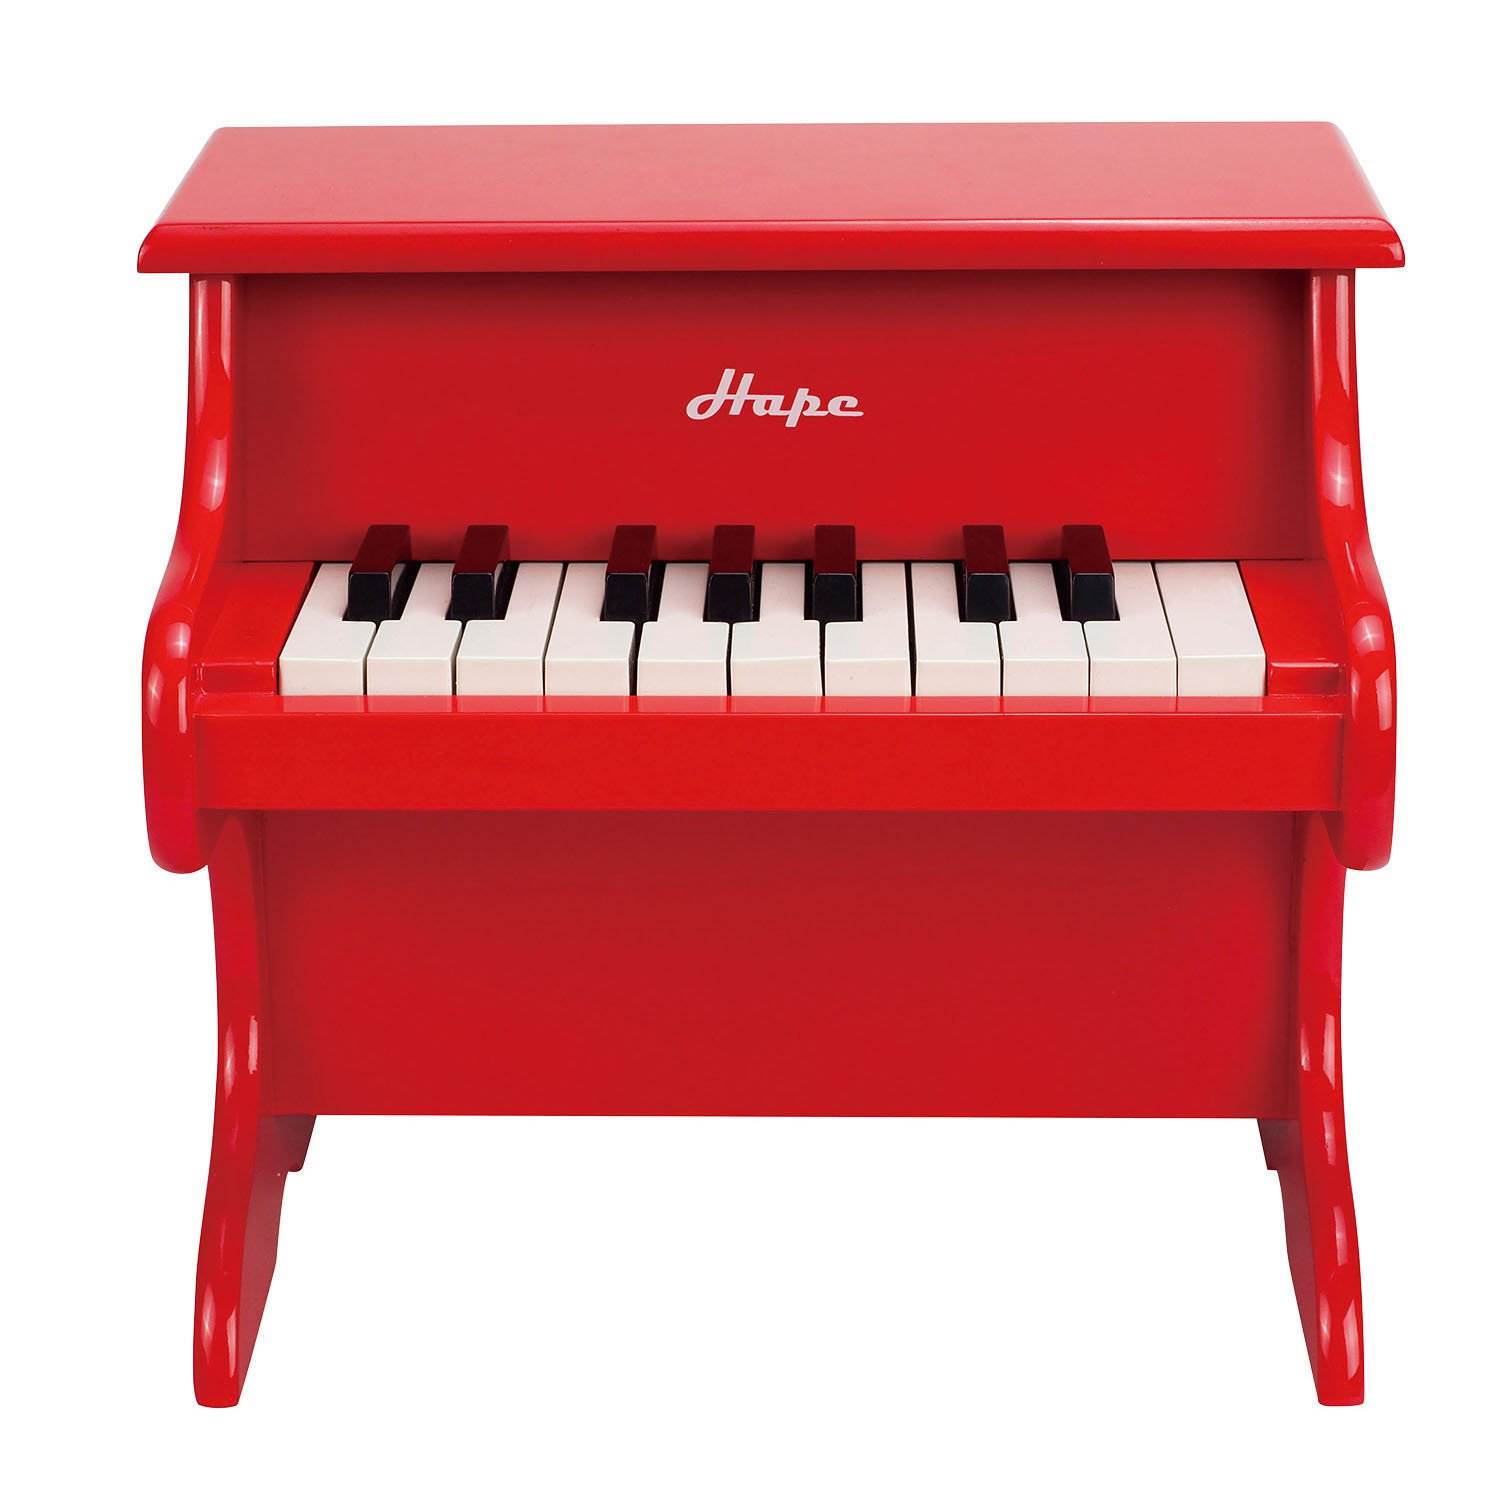 Hape 18 Key Playful Piano - image 1 of 5